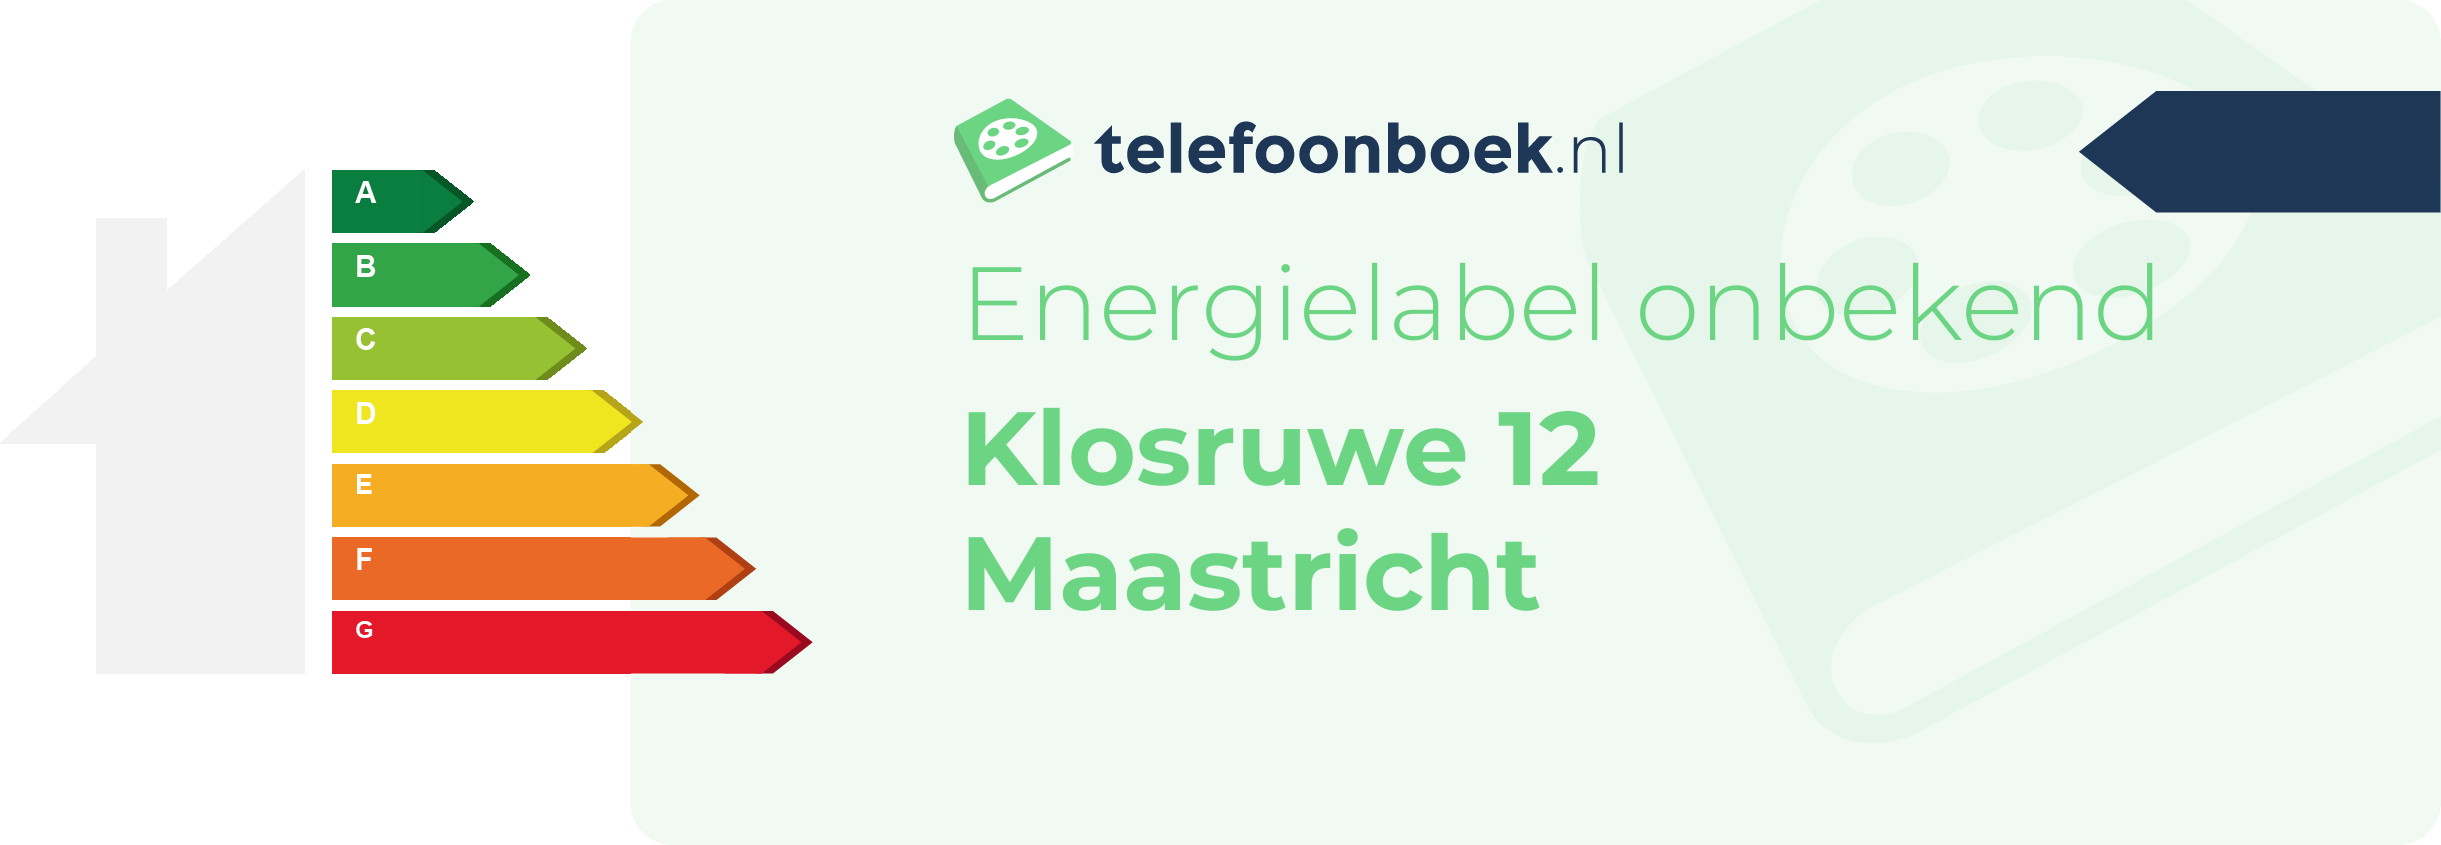 Energielabel Klosruwe 12 Maastricht